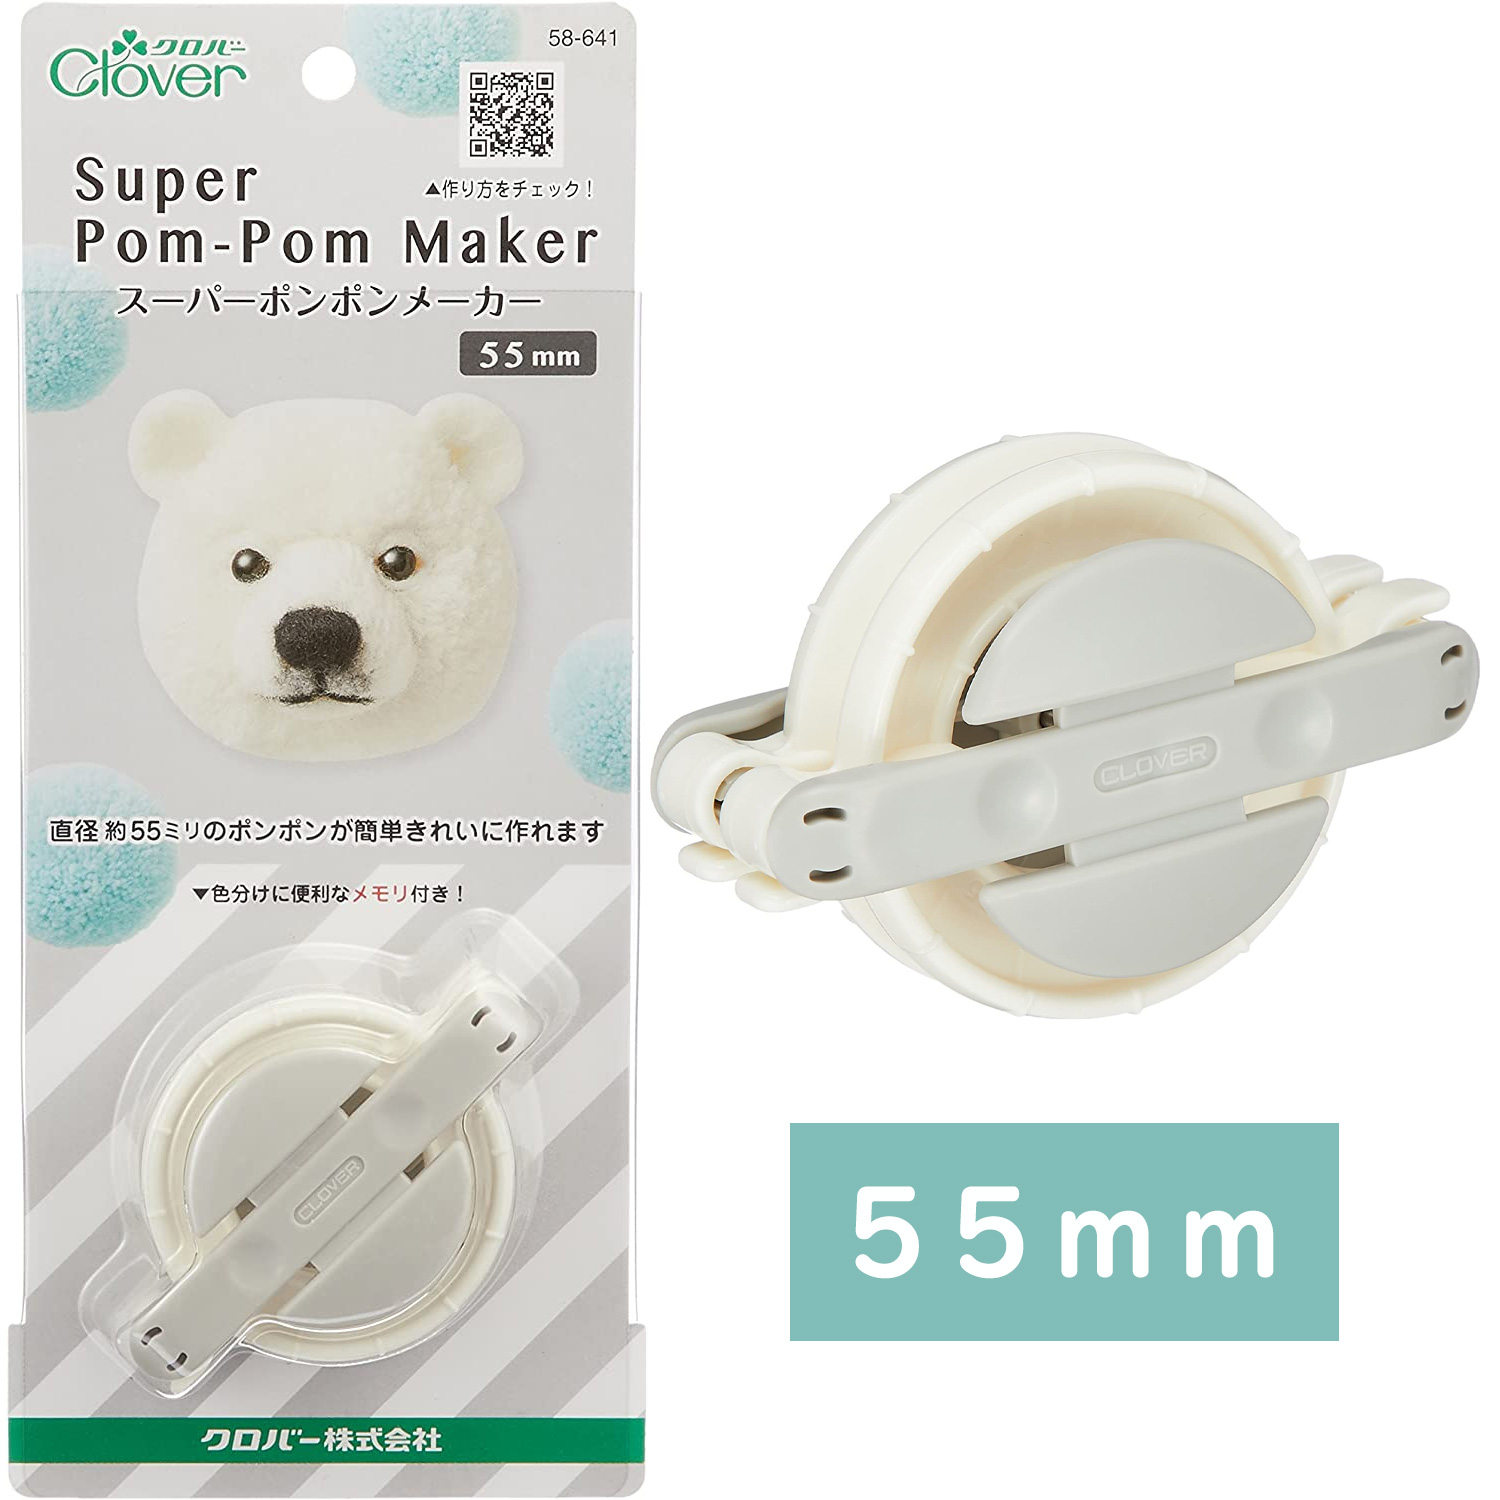 CL58-641 Super Pom Pom Maker 55mm (pcs)